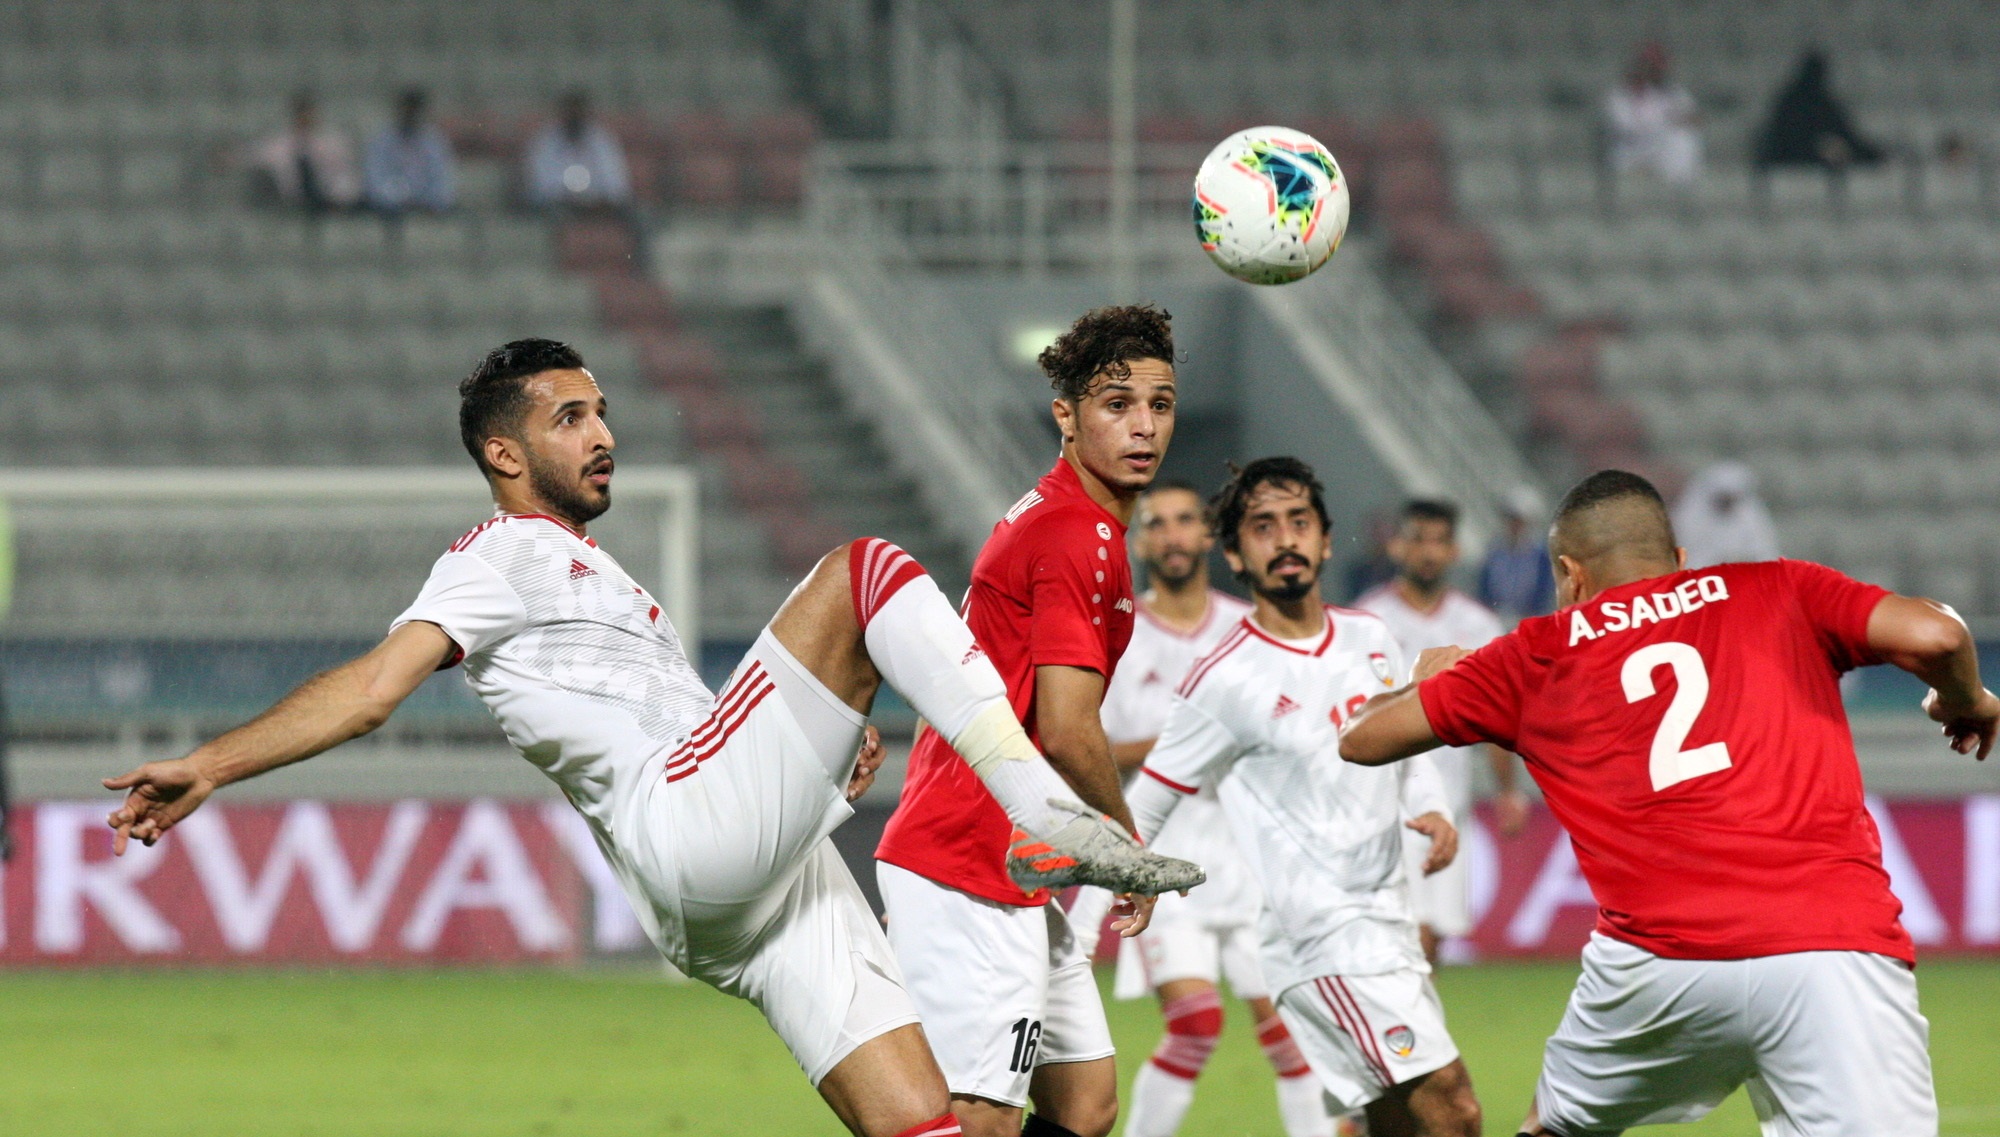 The football match between UAE and Yemen